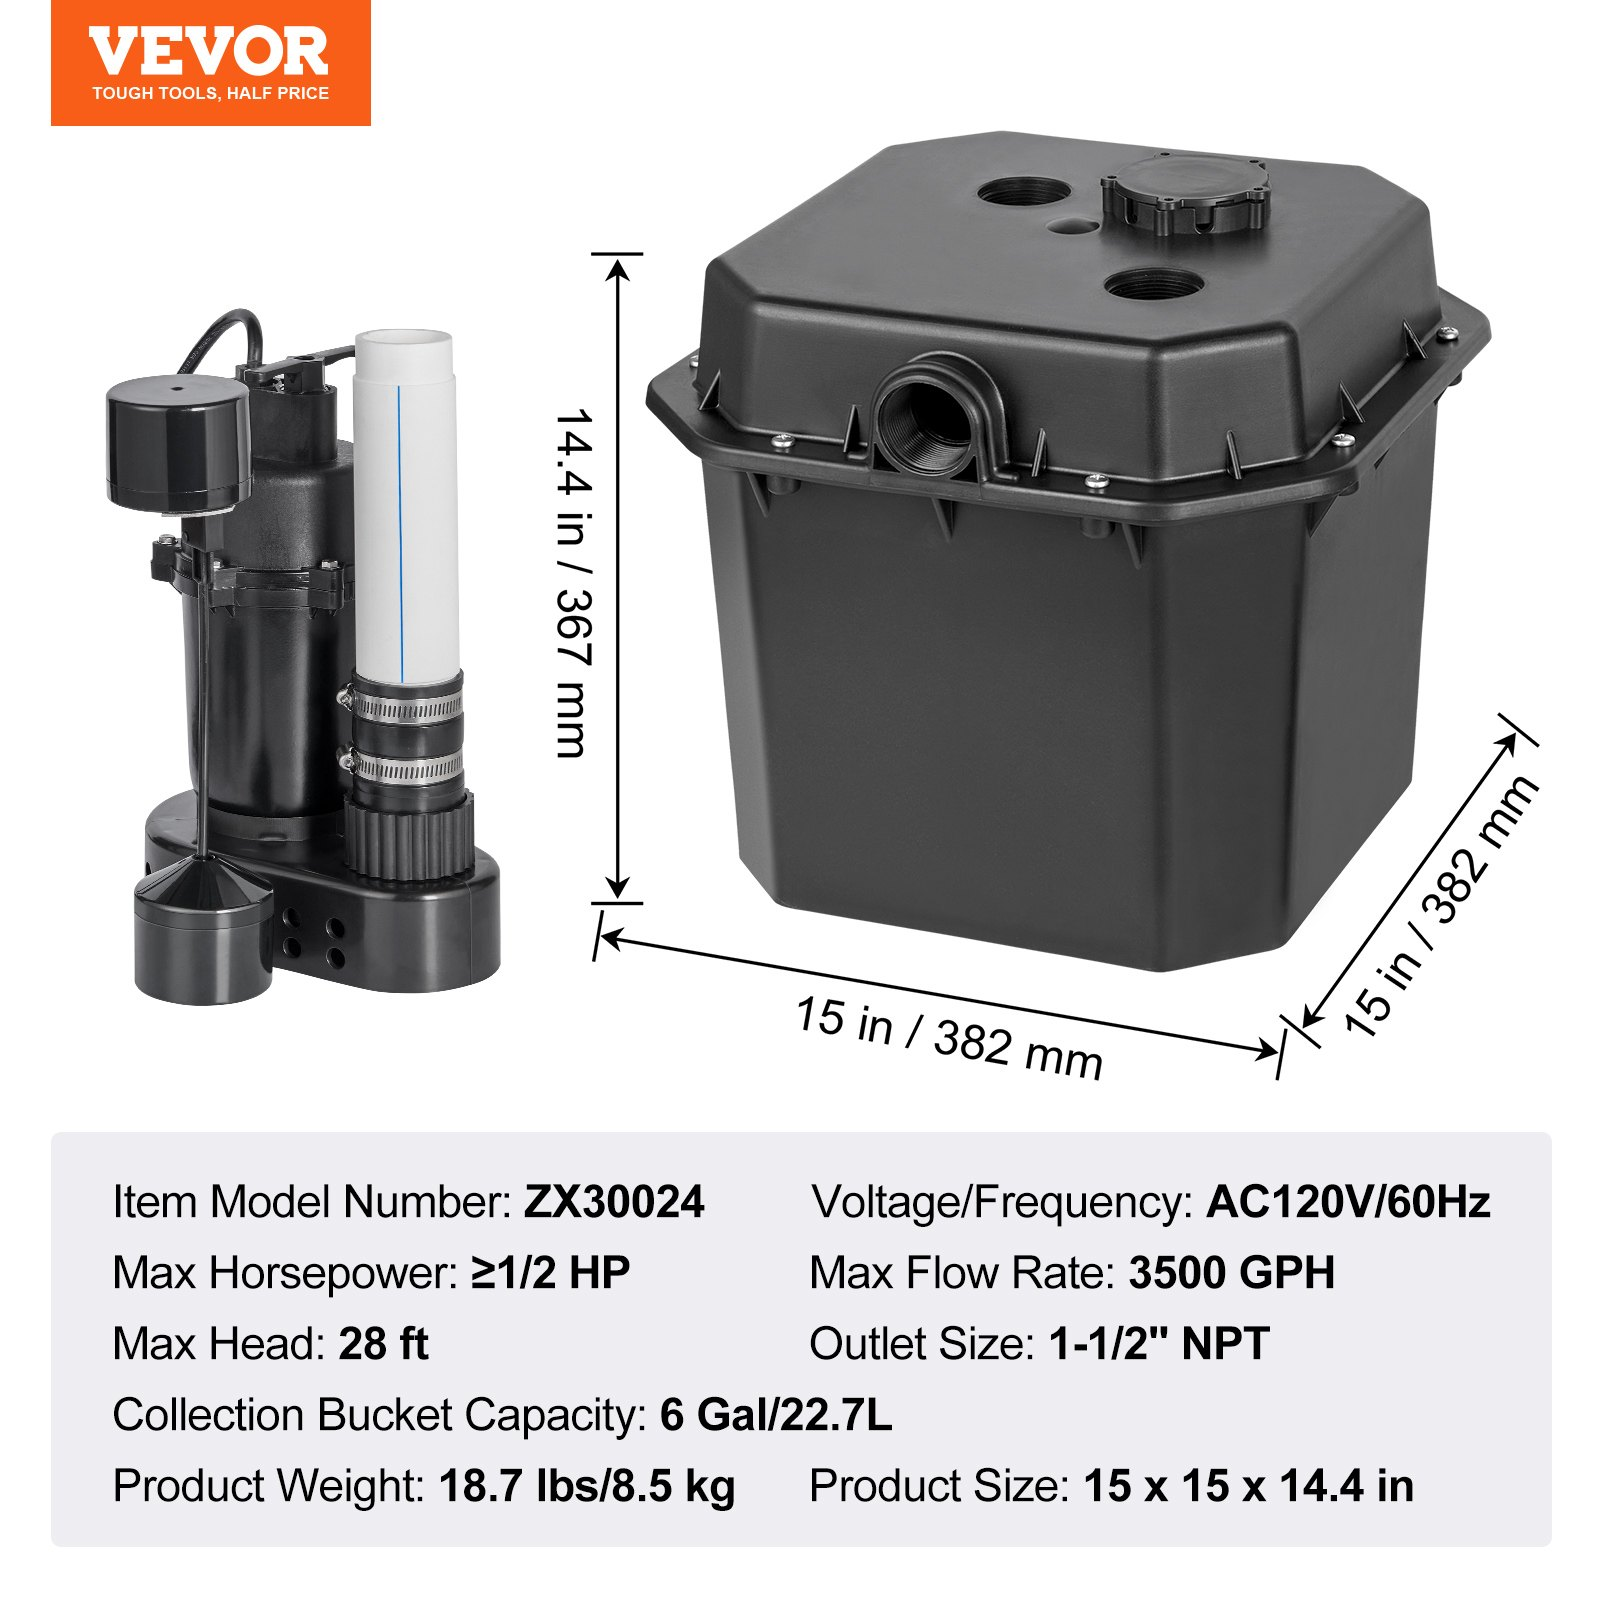 VEVOR Utility Sink Pump, 1/2 HP, 120-Volt, 3500 GPH Flow, 28 ft Head, Under-Sink Sump Pump System with 6 Gallon Basin, Automatic Utility/Laundry Sink Pump, Drain Pump with 1-1/2" NPT Outlet, Black, Goodies N Stuff